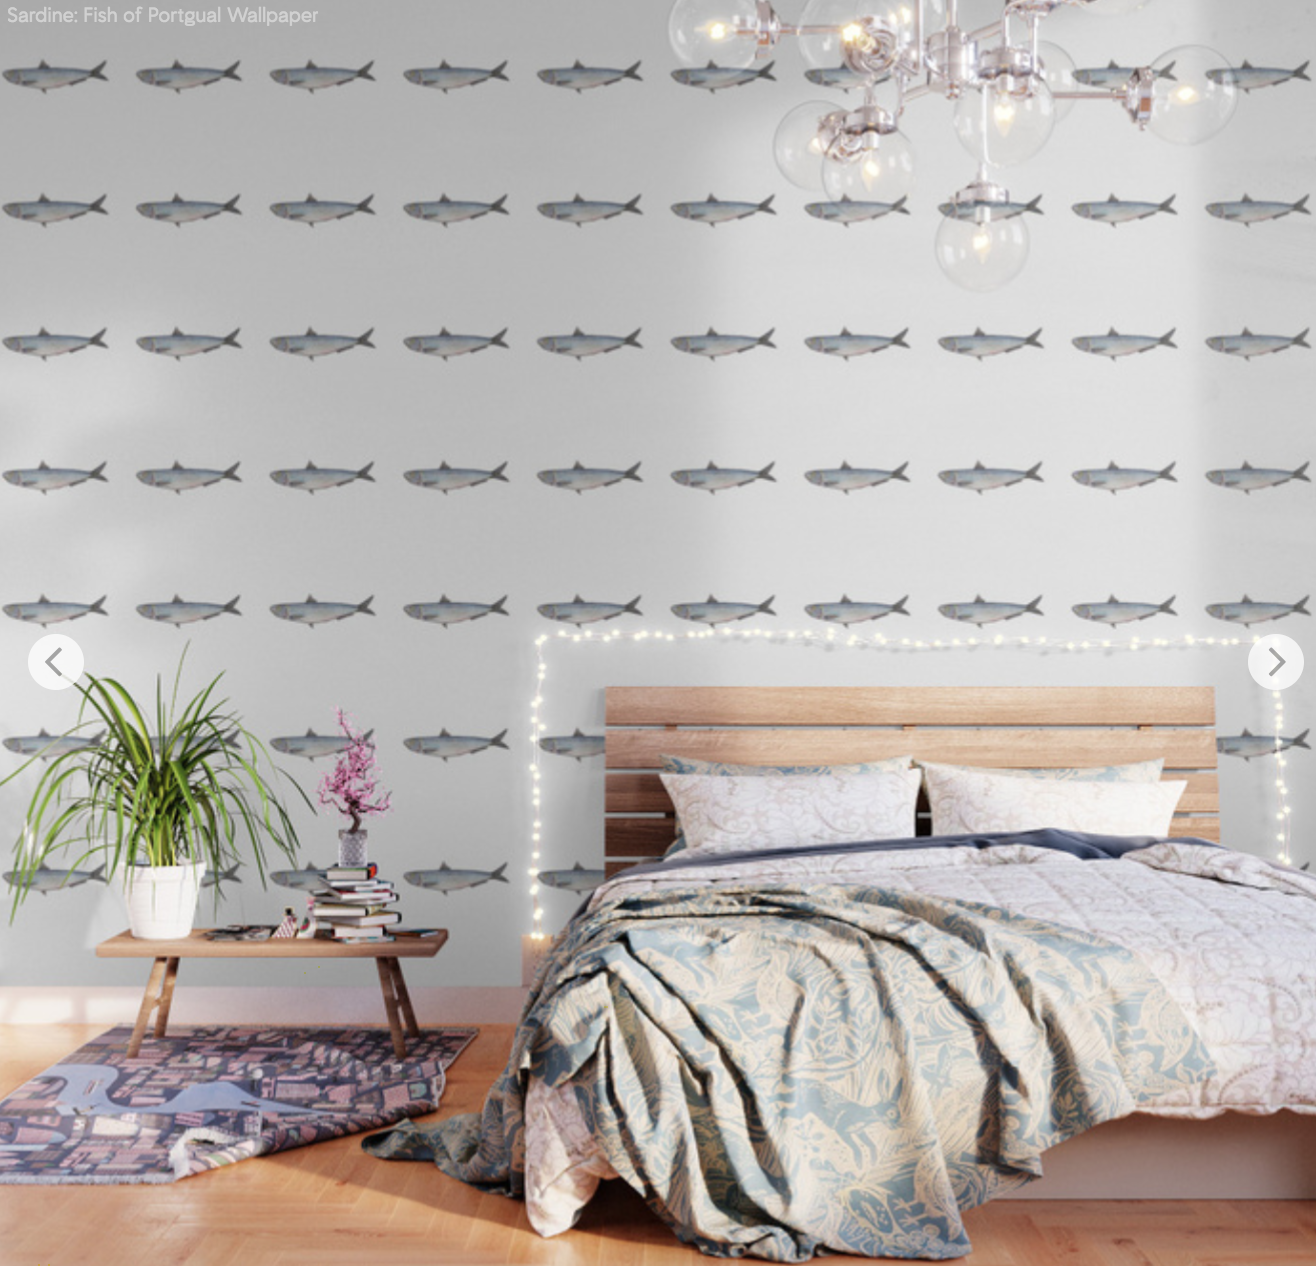 Sardine wallpaper